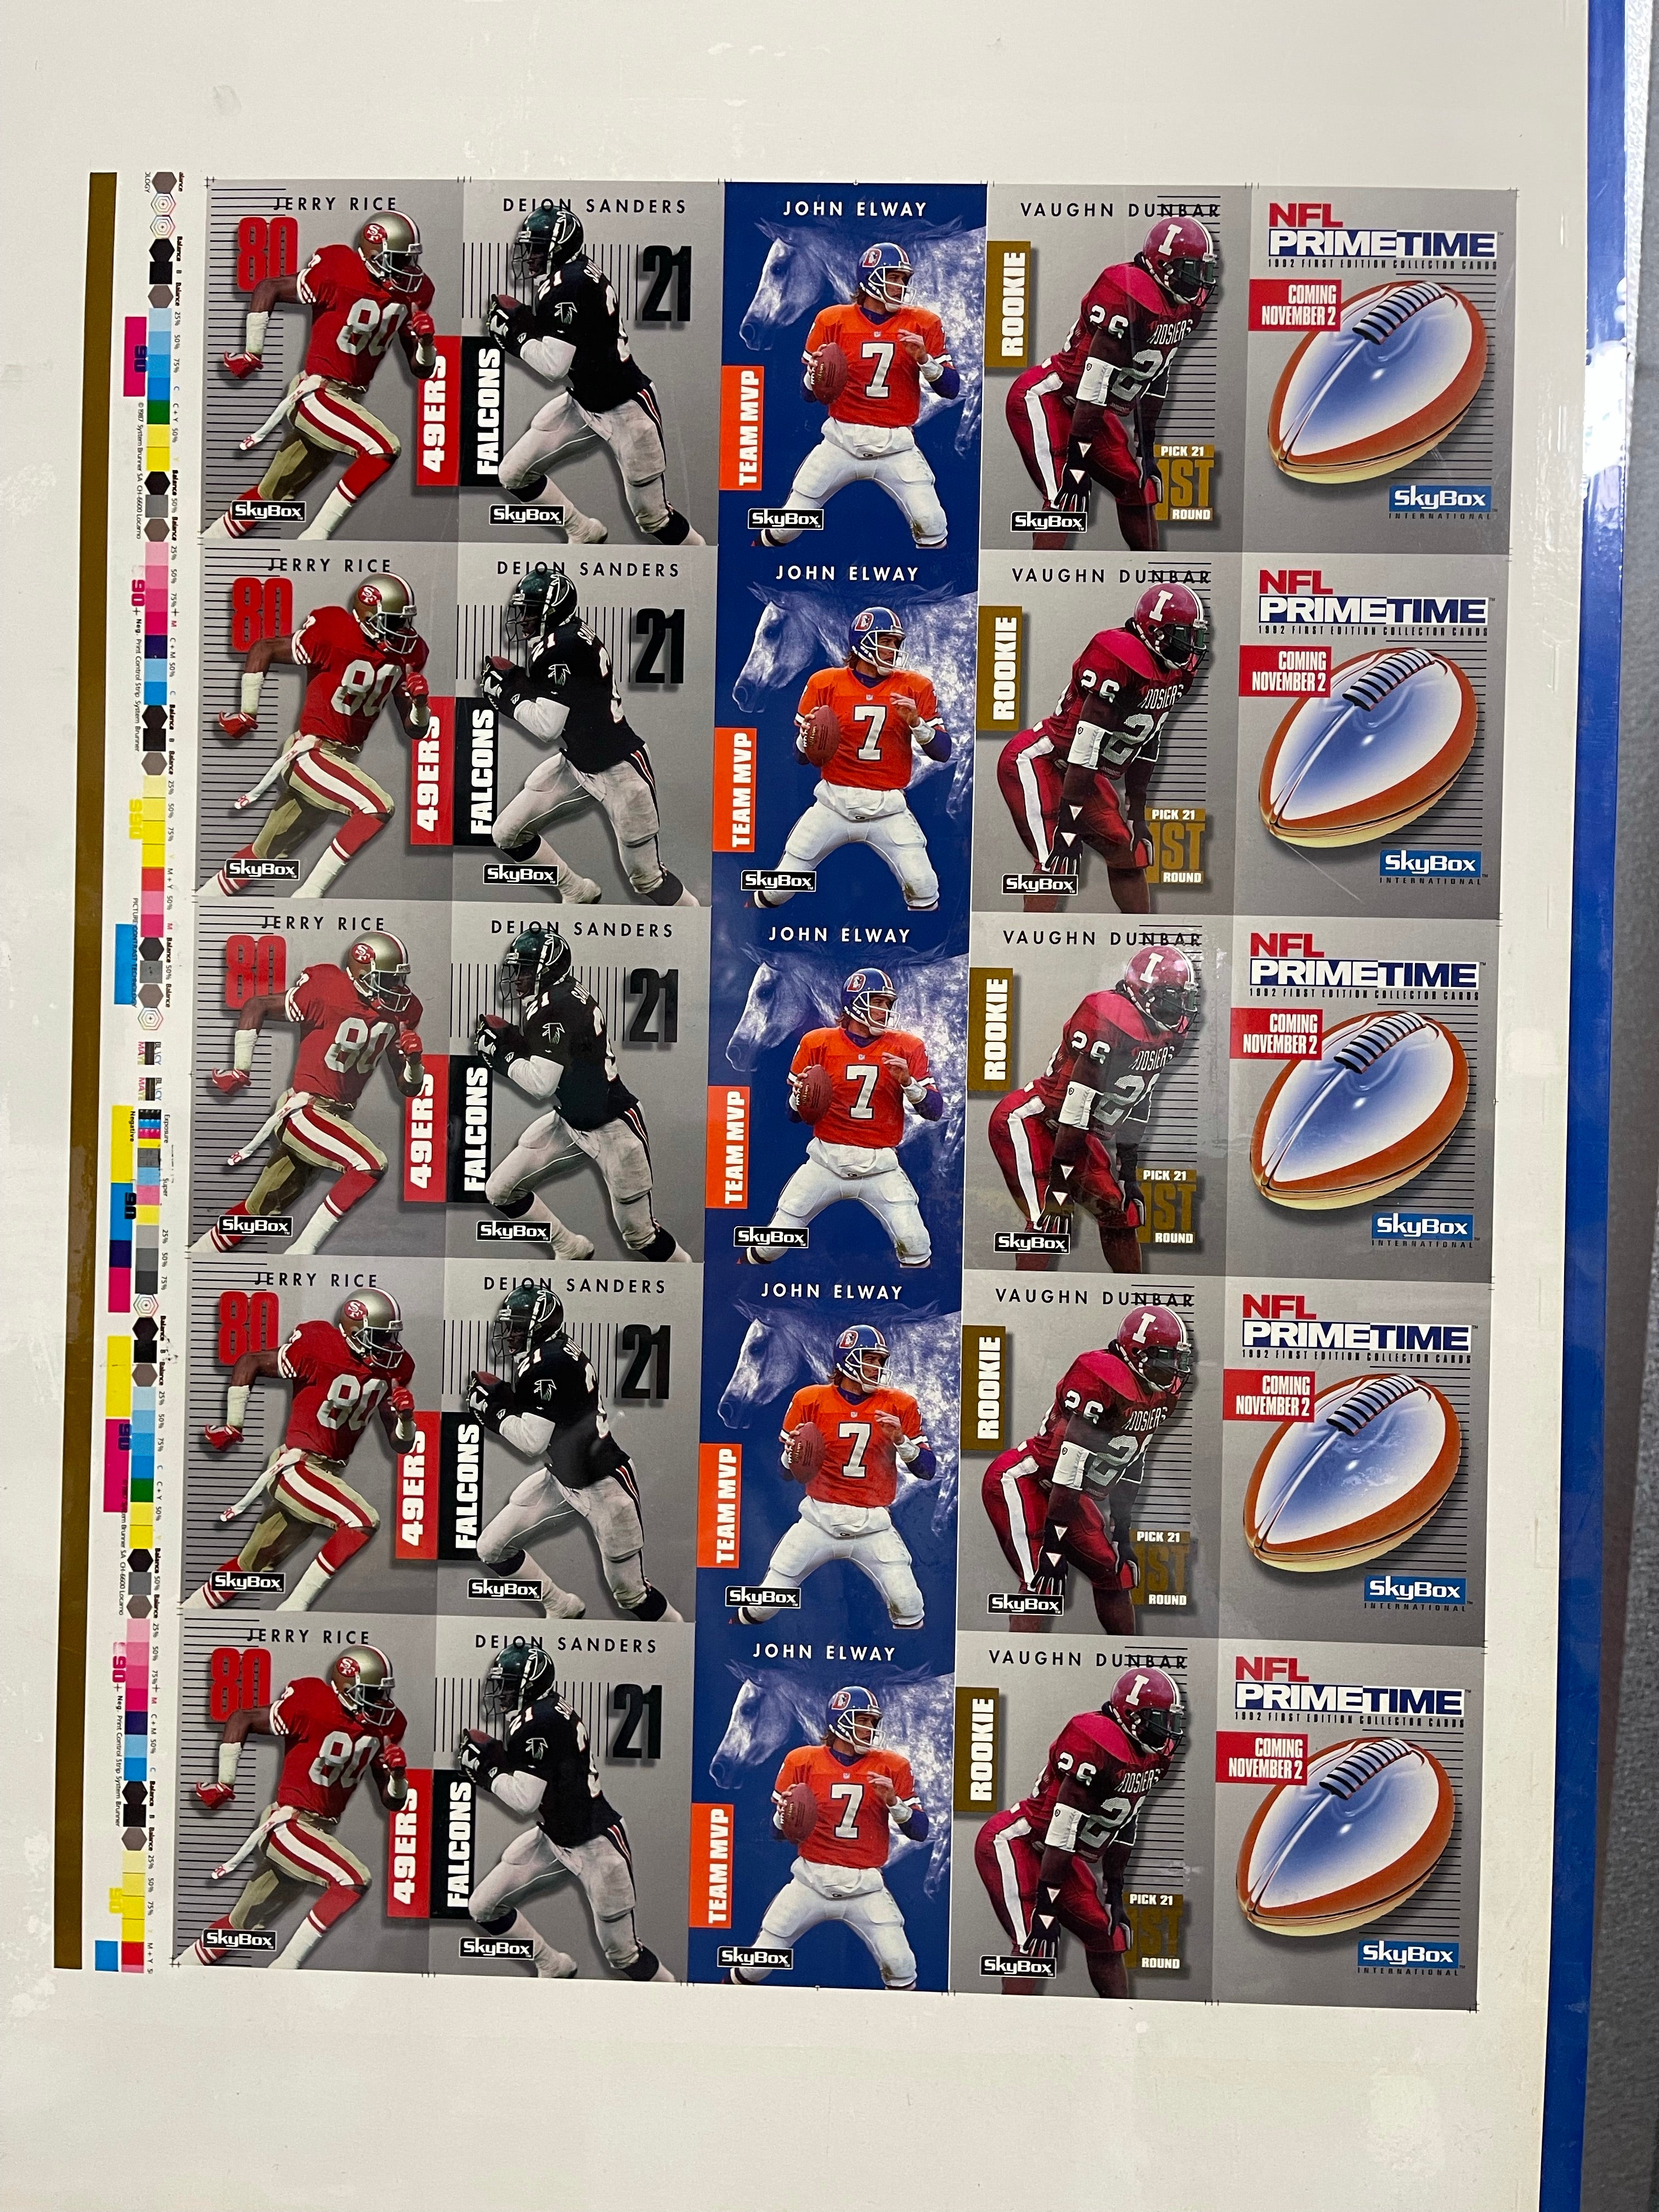 NFL skybox Football star cards rare uncut matted sheet 1992